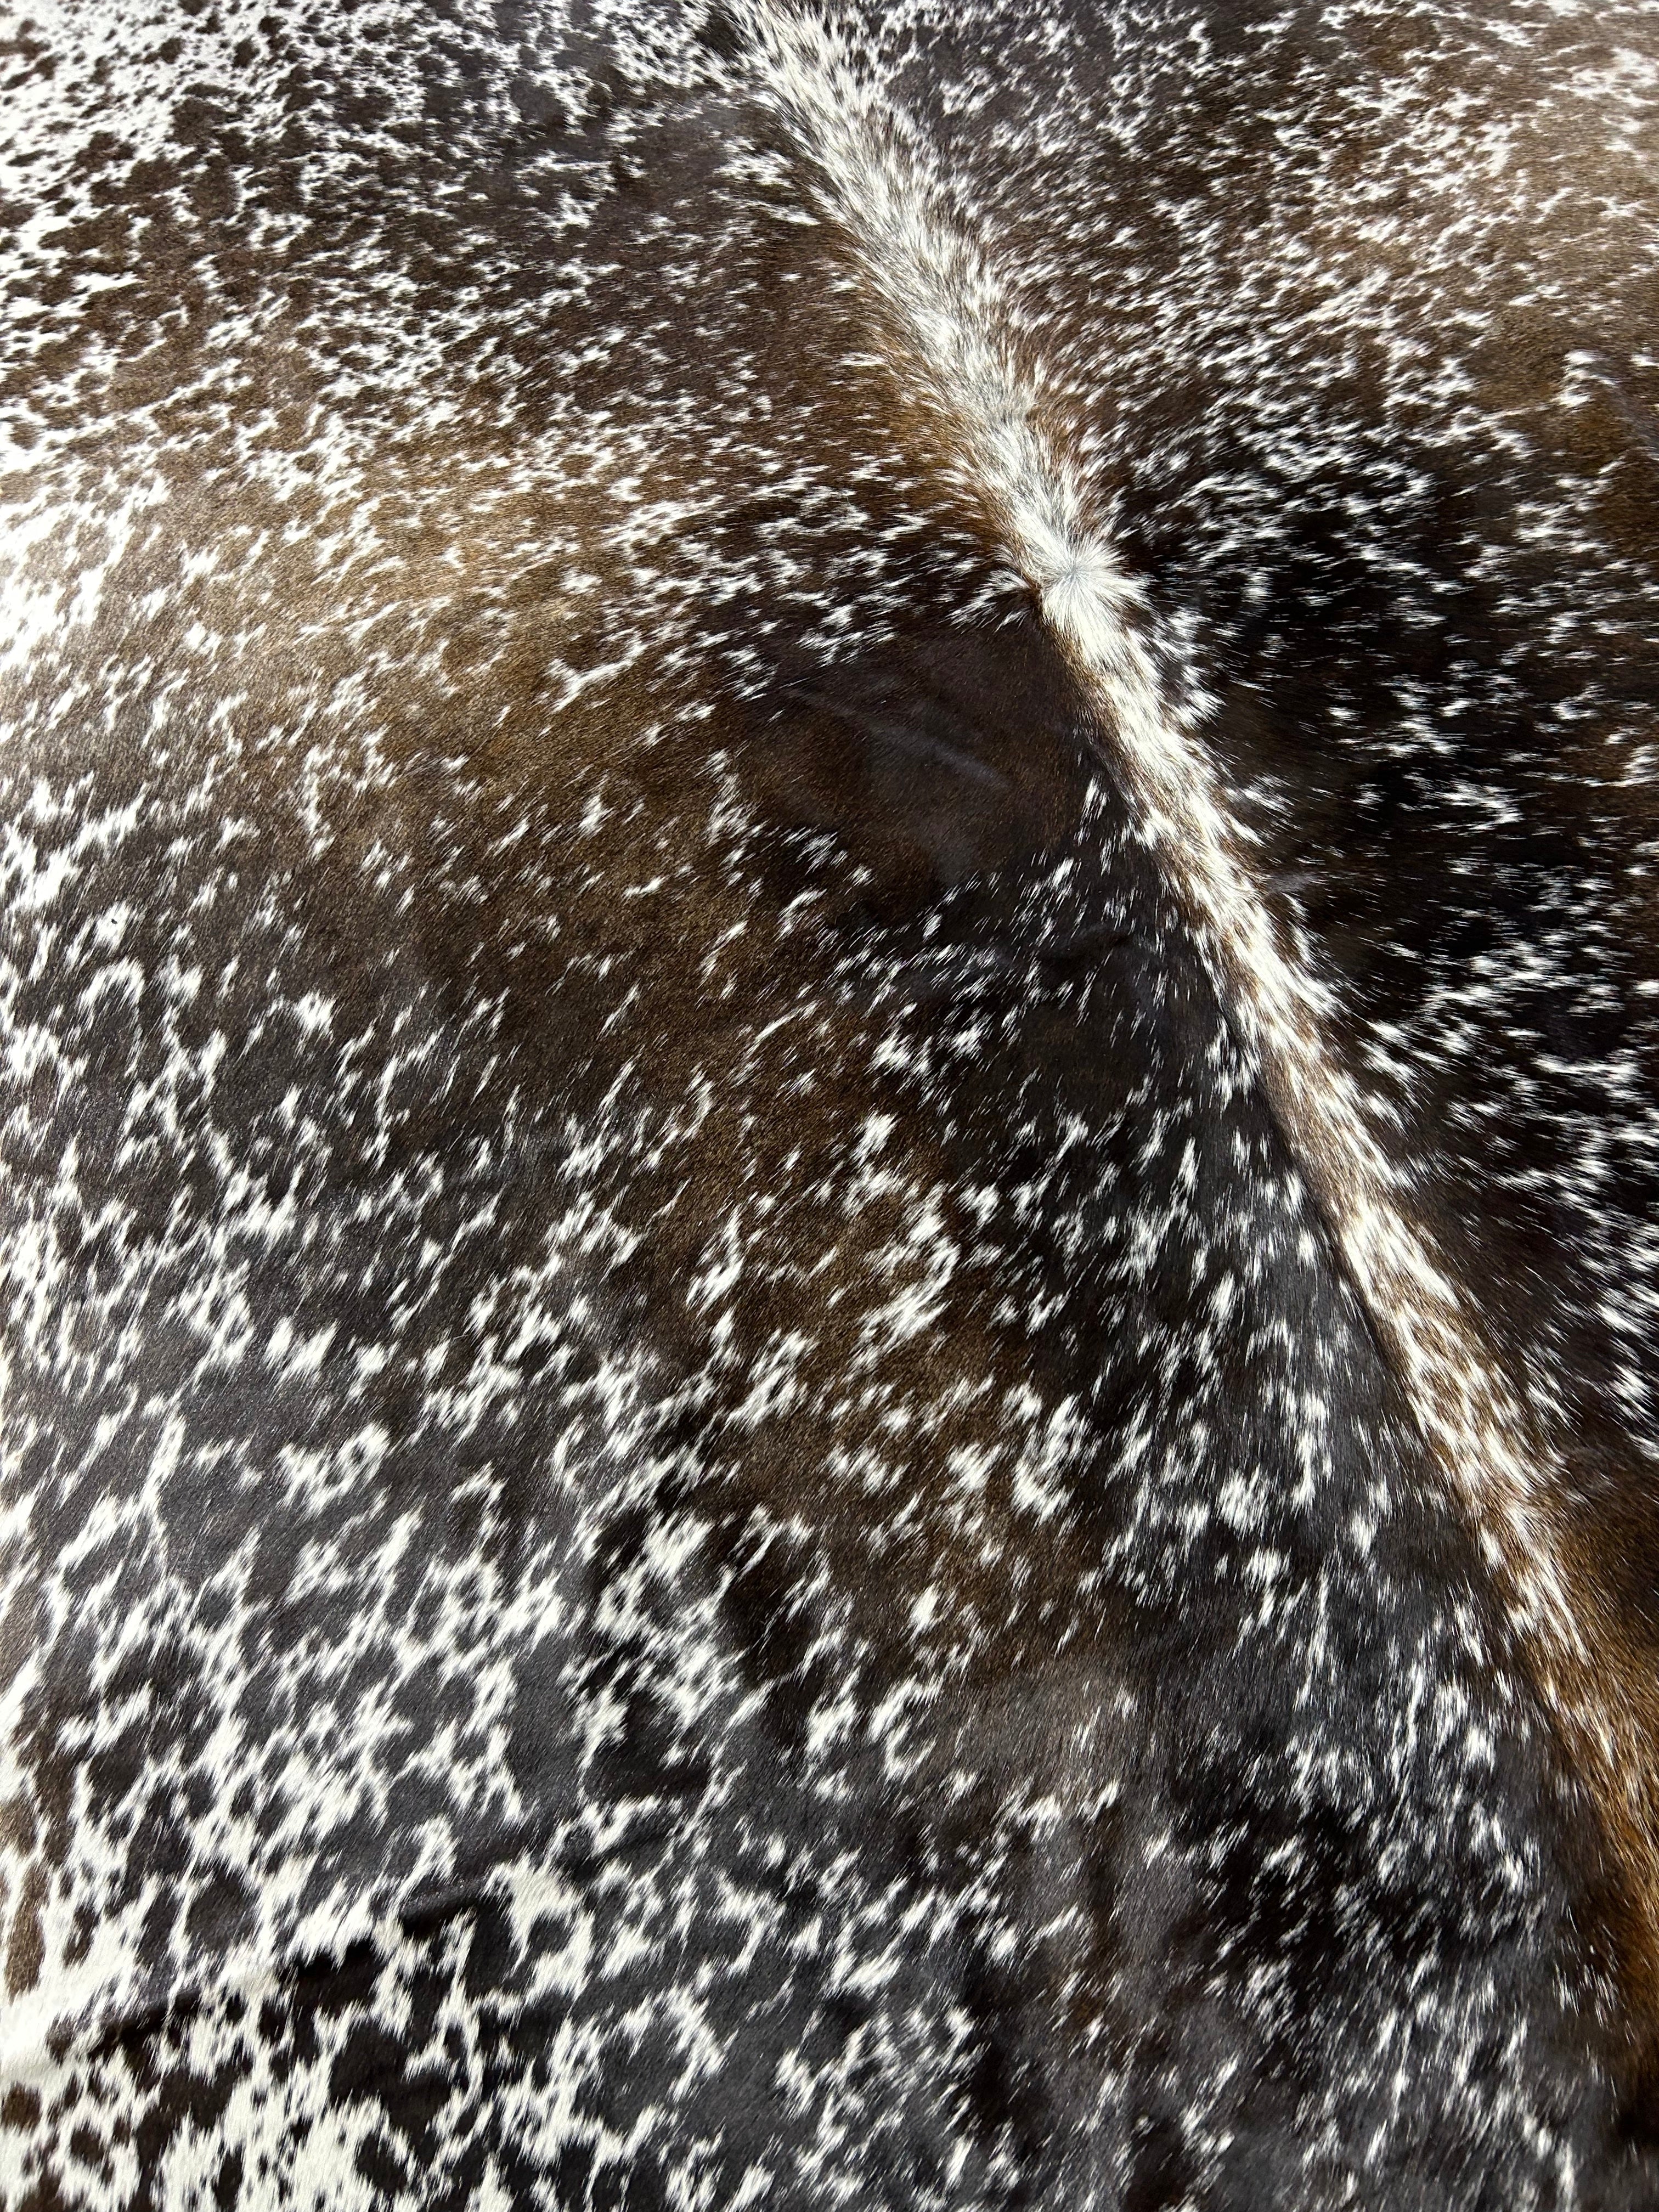 Beautiful Speckled Brazilian Cowhide Rug (brown spots in 2 tones) Size: 8x7.2 feet O-412